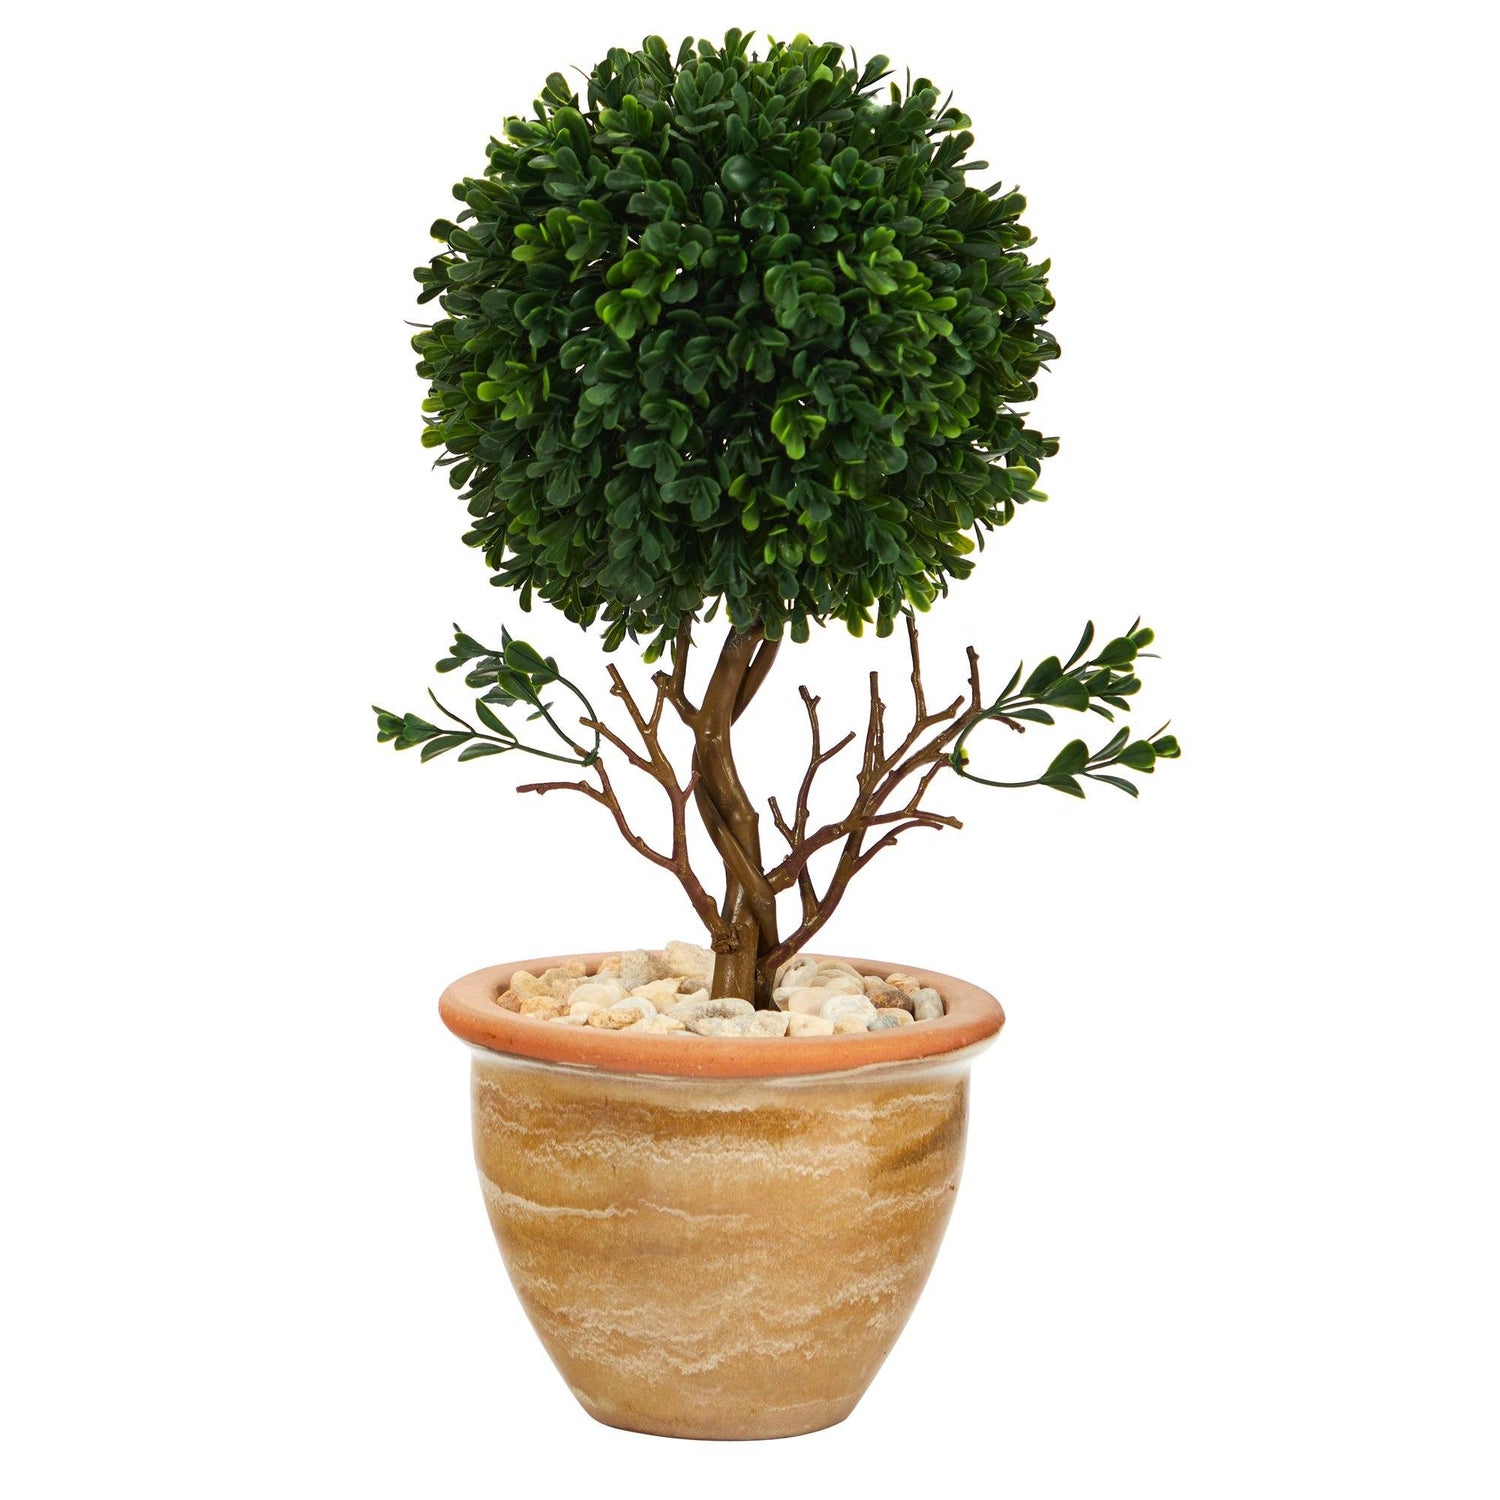 16” Boxwood Topiary Artificial Tree in Ceramic Planter  (Indoor/Outdoor)